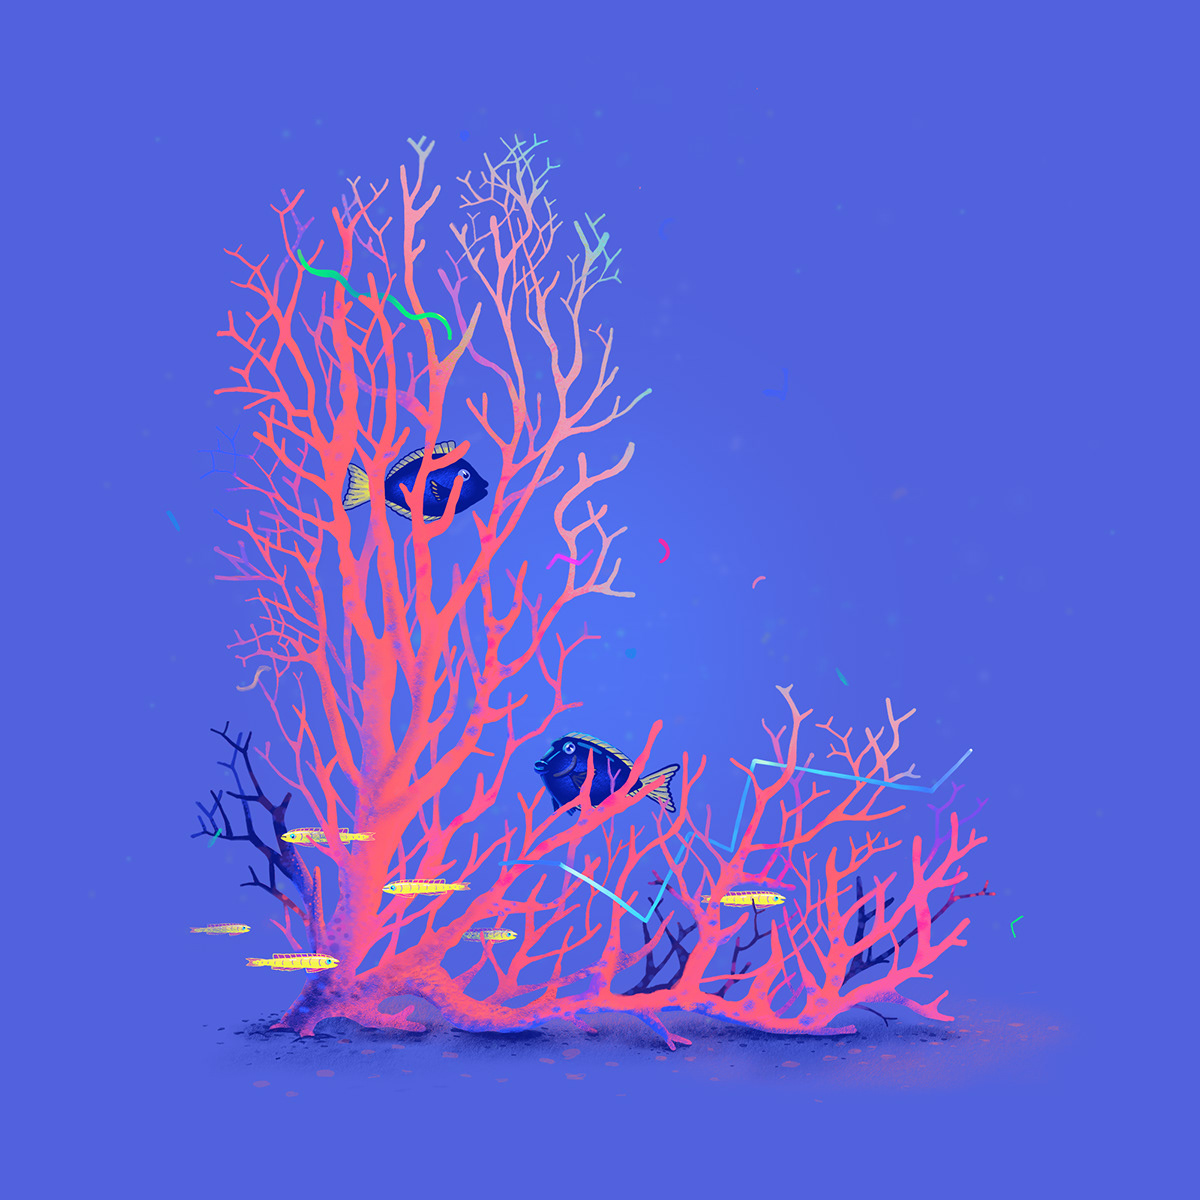 illustrated type font typography   ILLUSTRATION  coral underwater artivism activism art 36 days